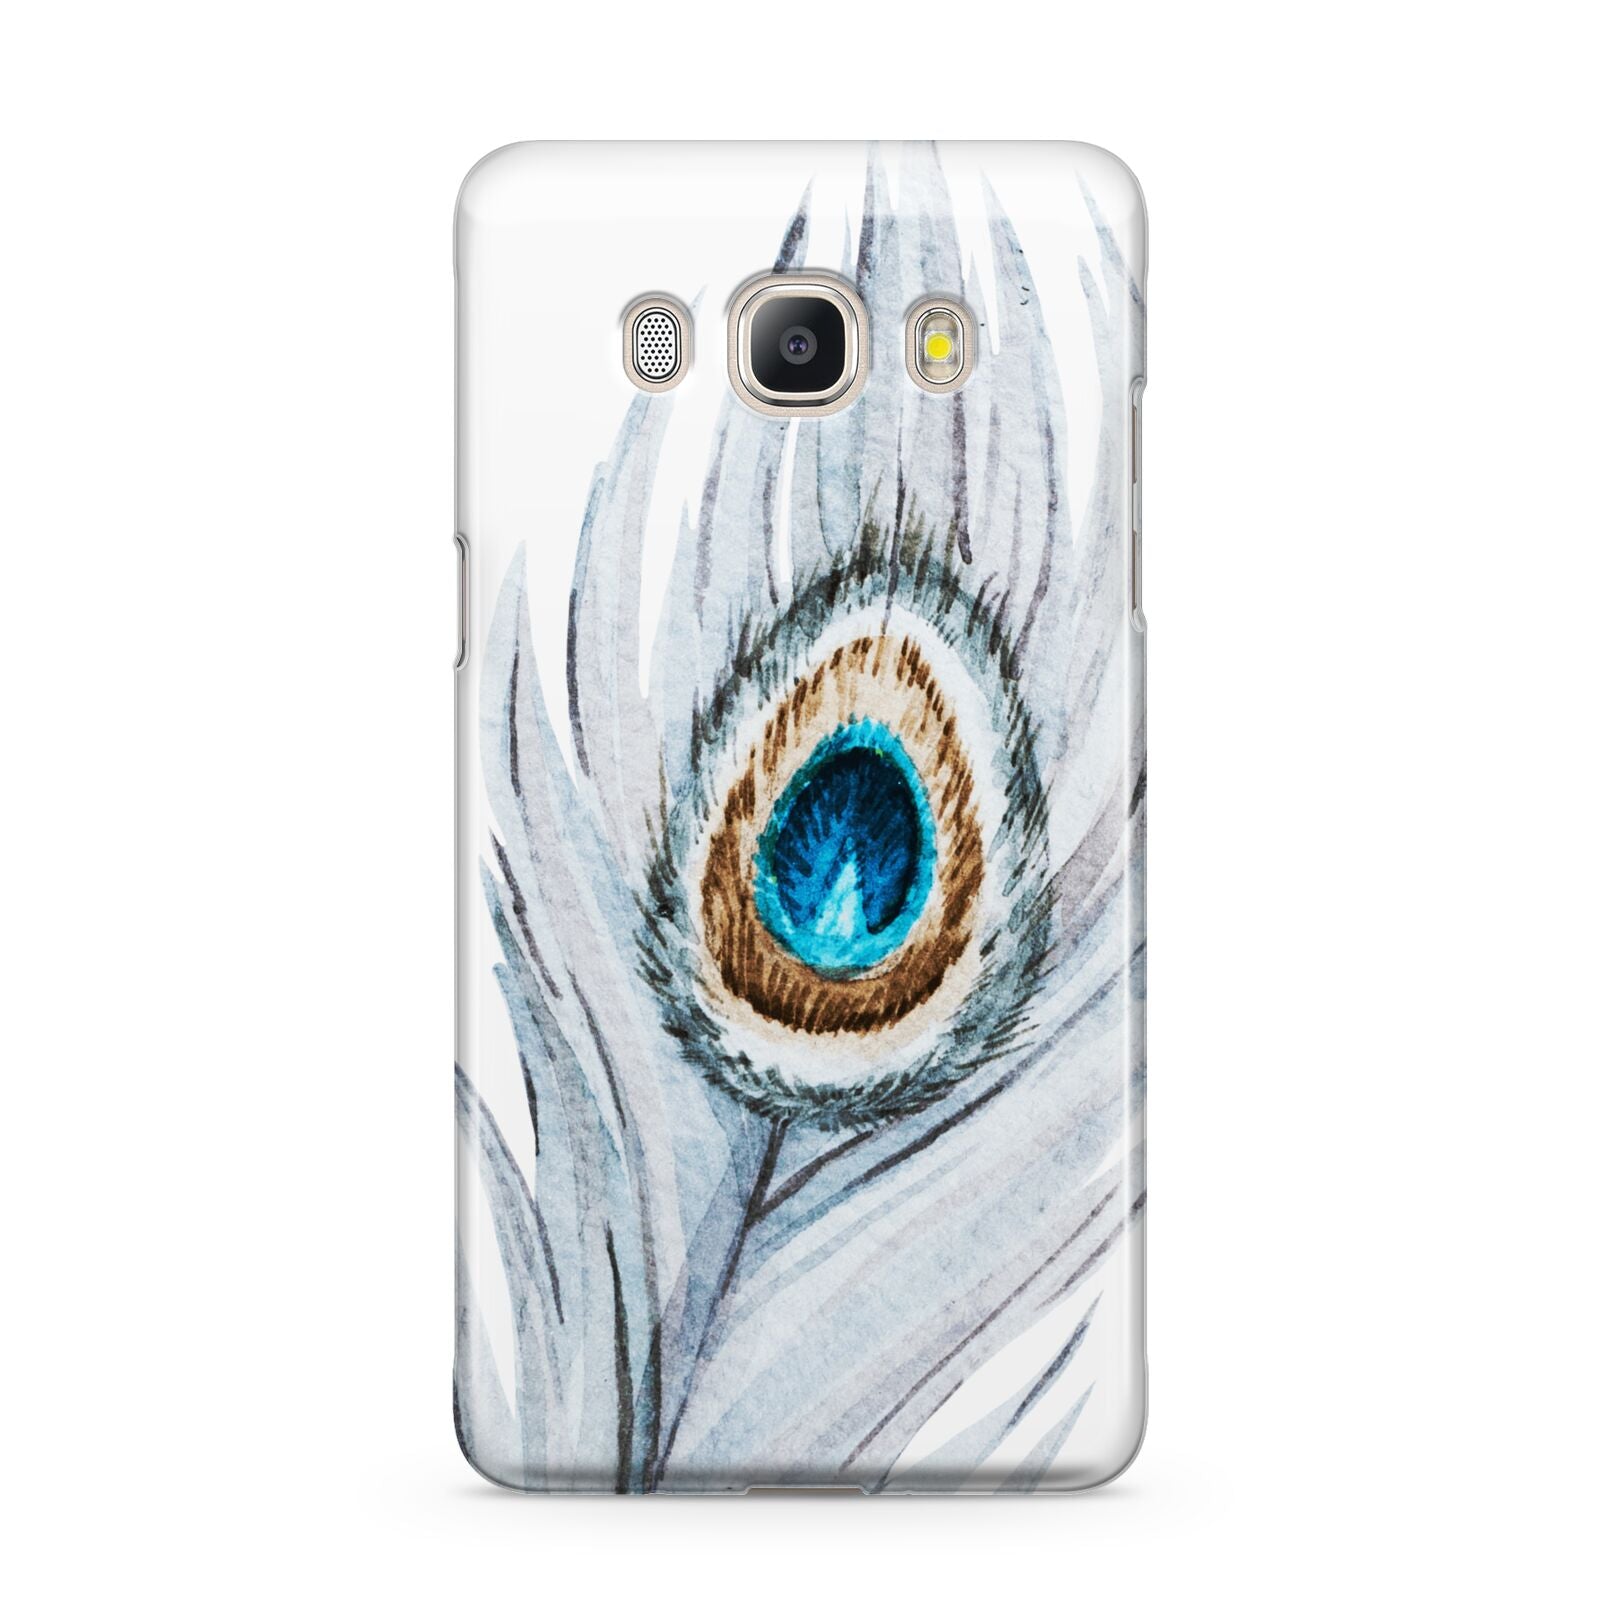 Peacock Samsung Galaxy J5 2016 Case